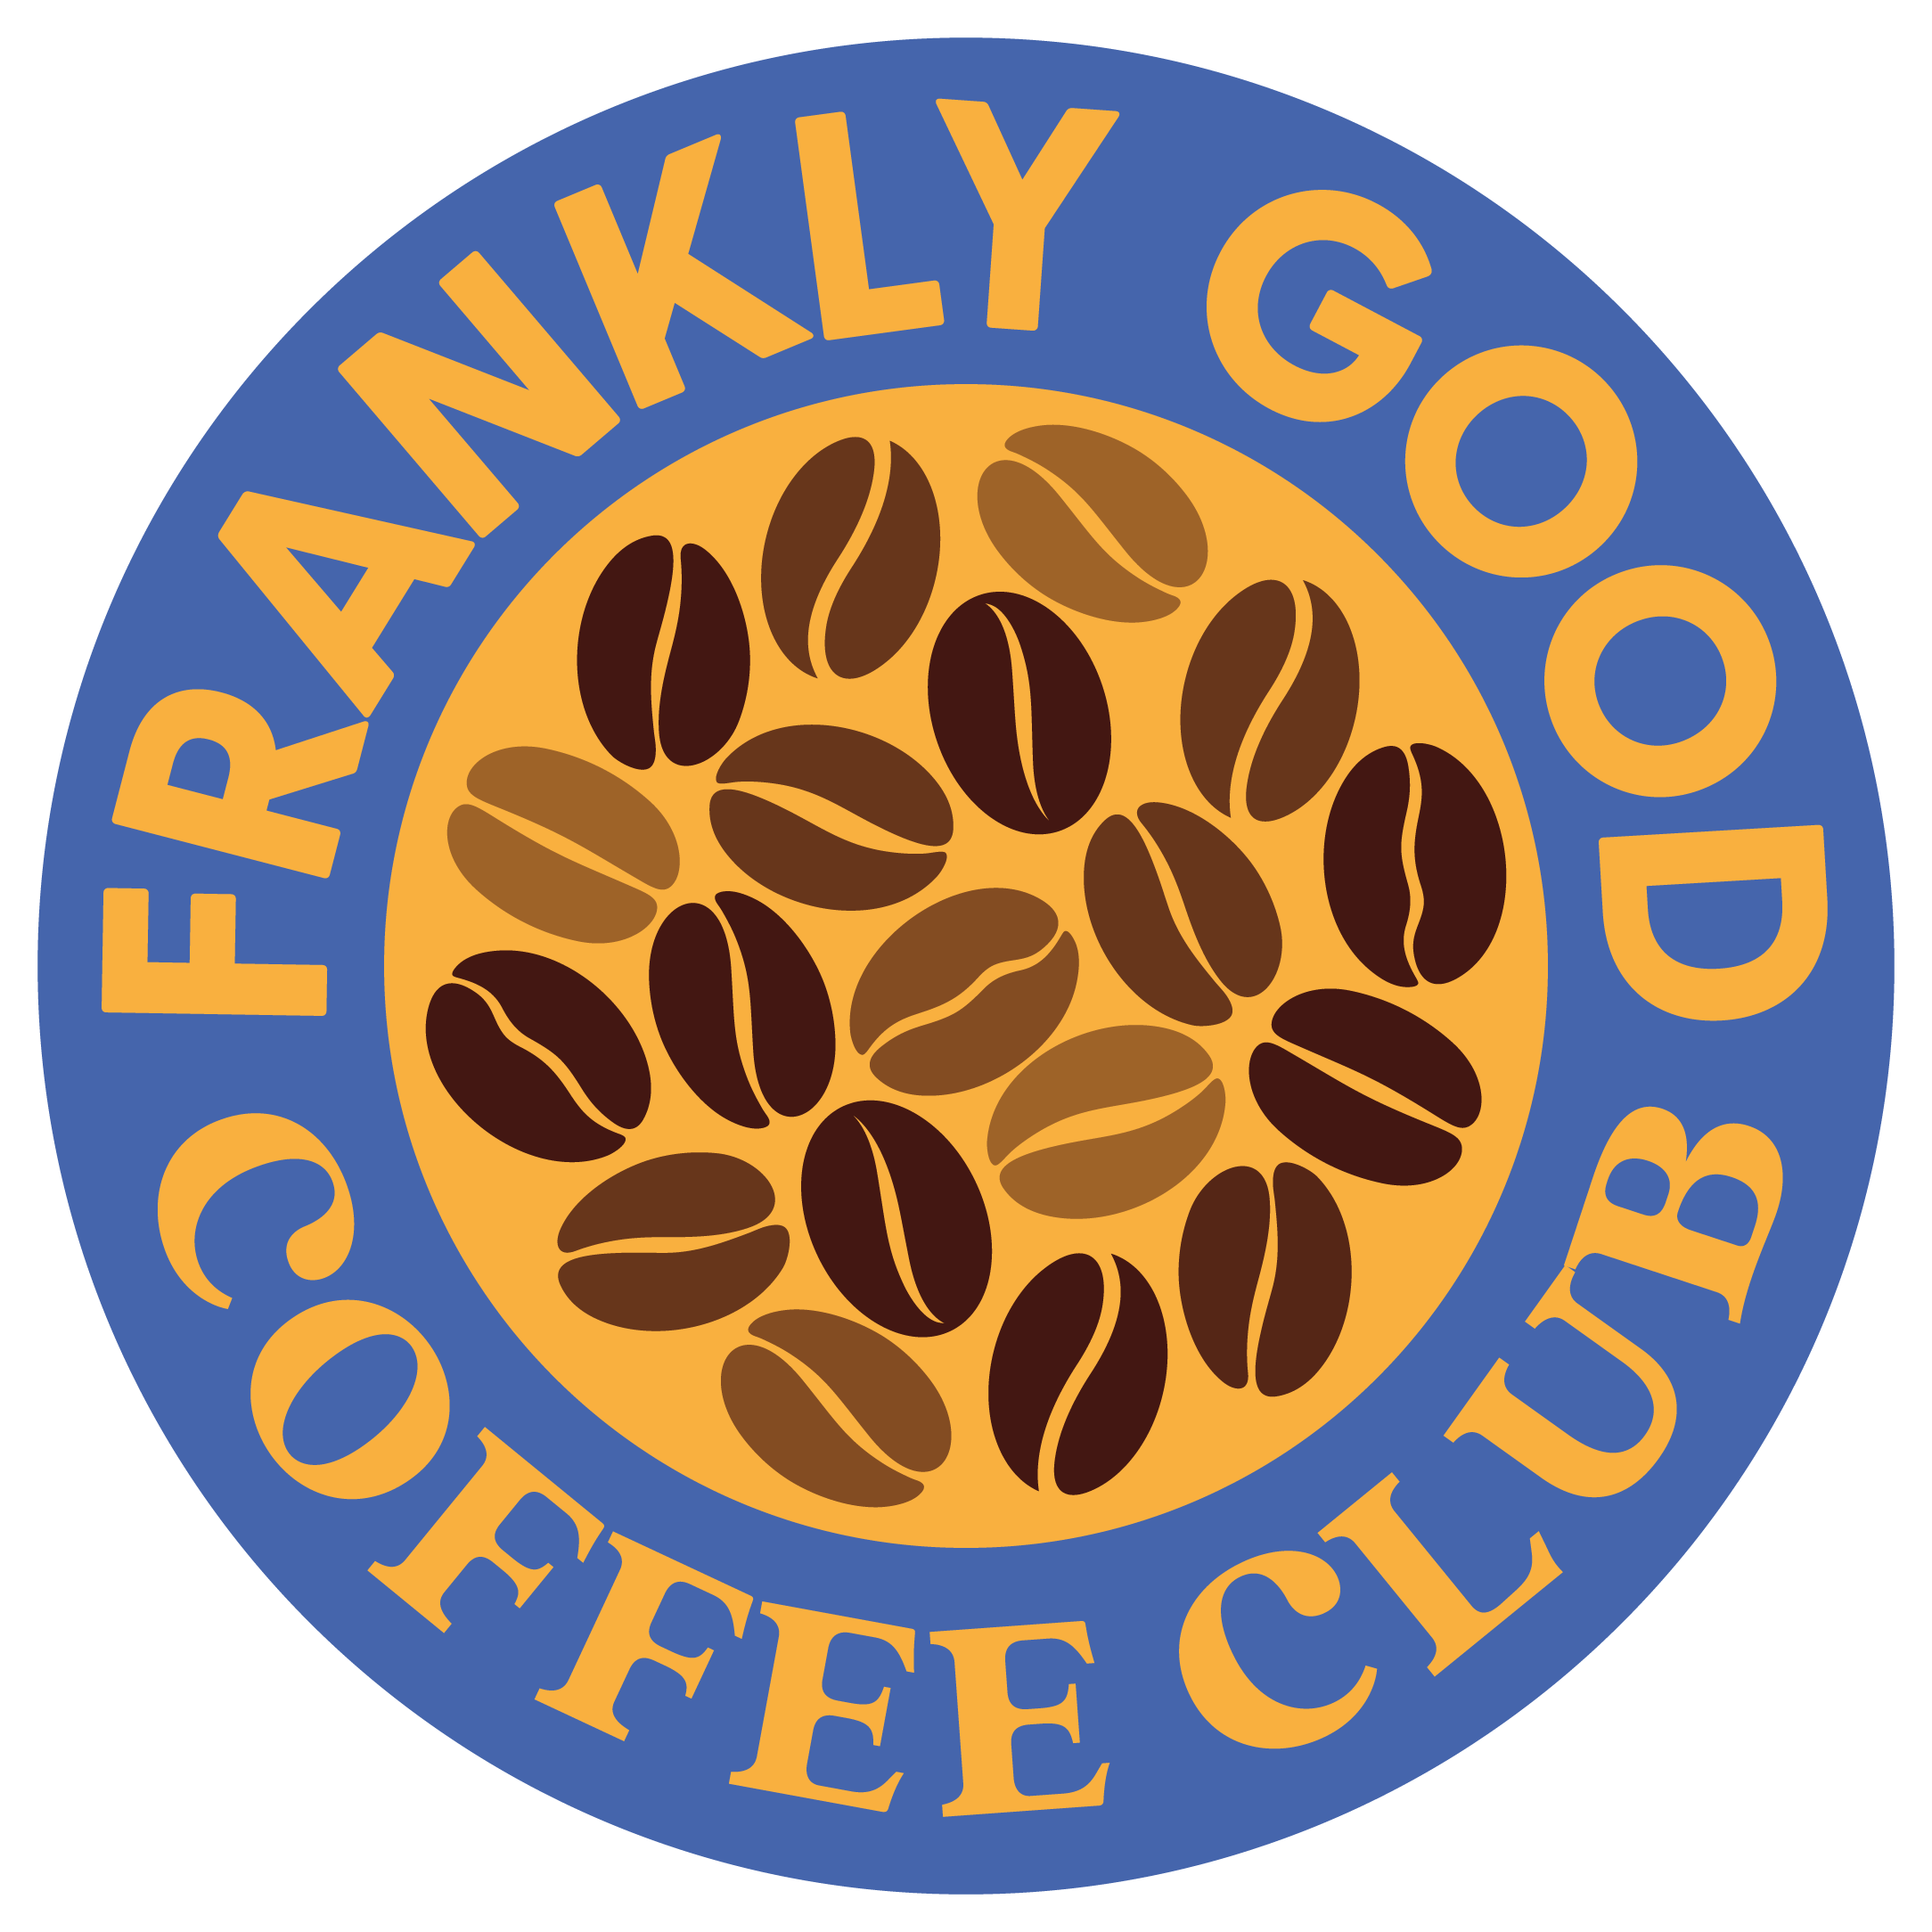 frankly-good-coffee-rgb-coffee-club-badge-1high-res.png